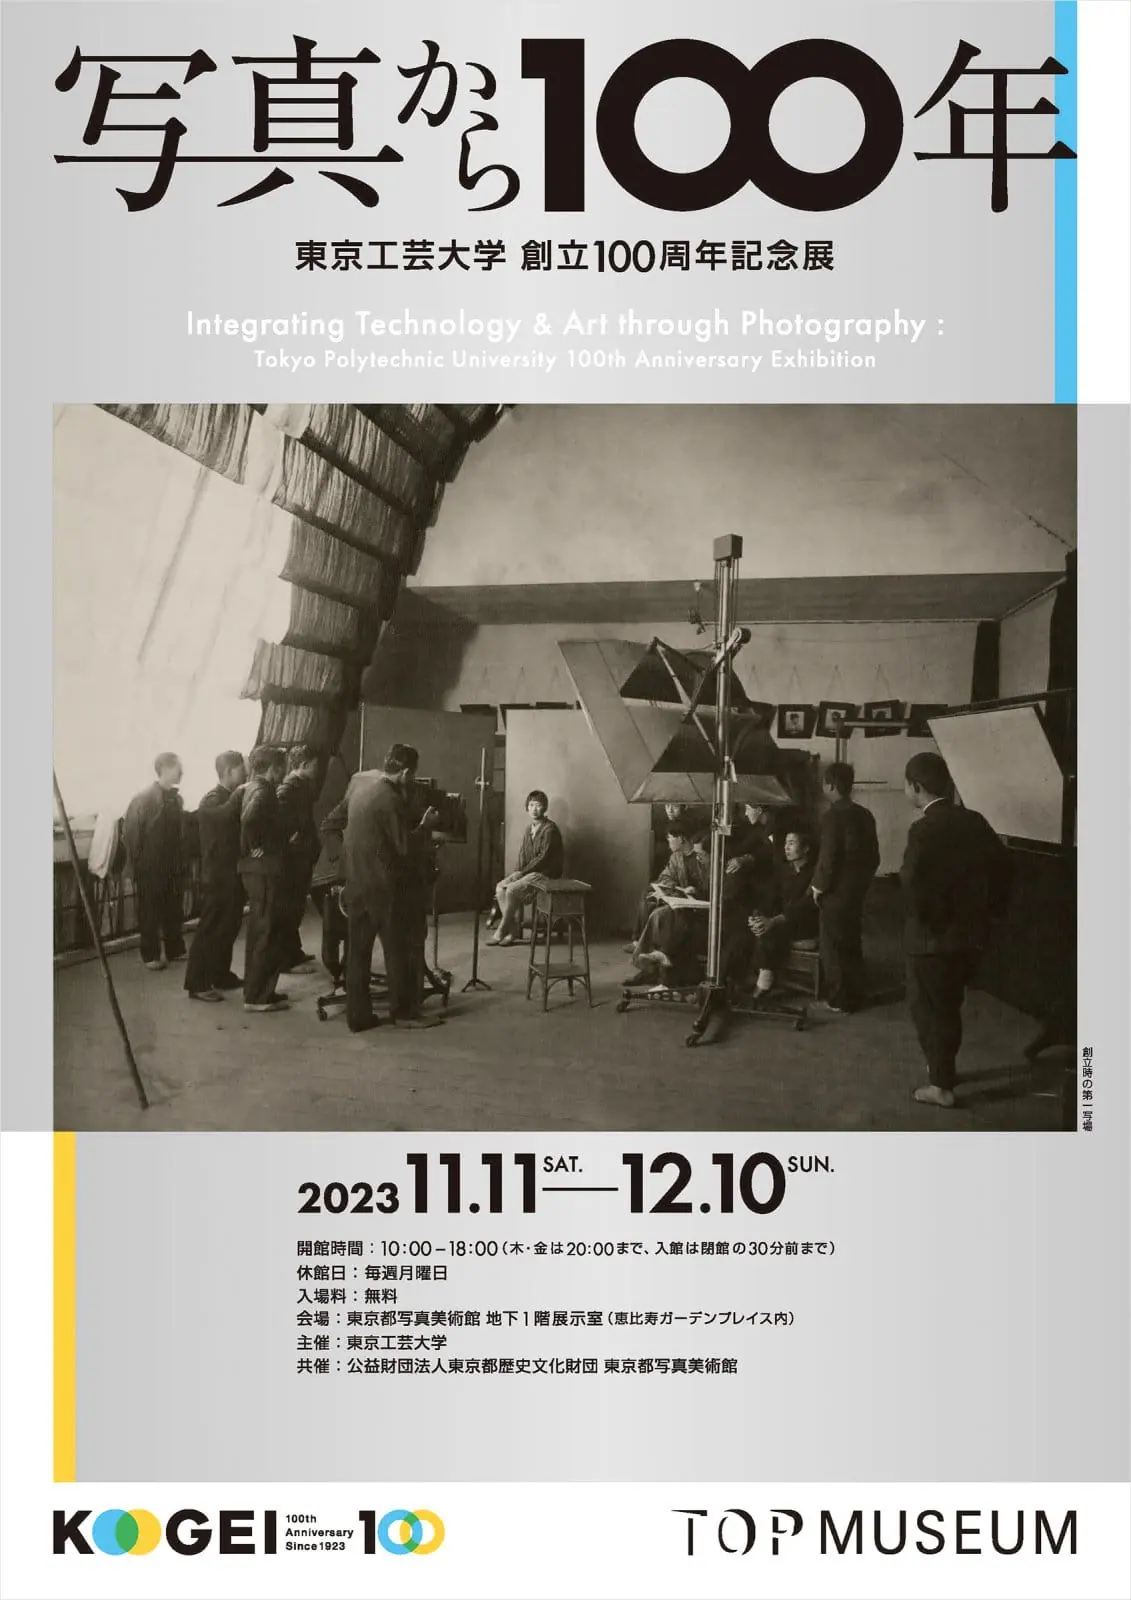 東京工芸大学 創立100周年記念展「写真から100年」